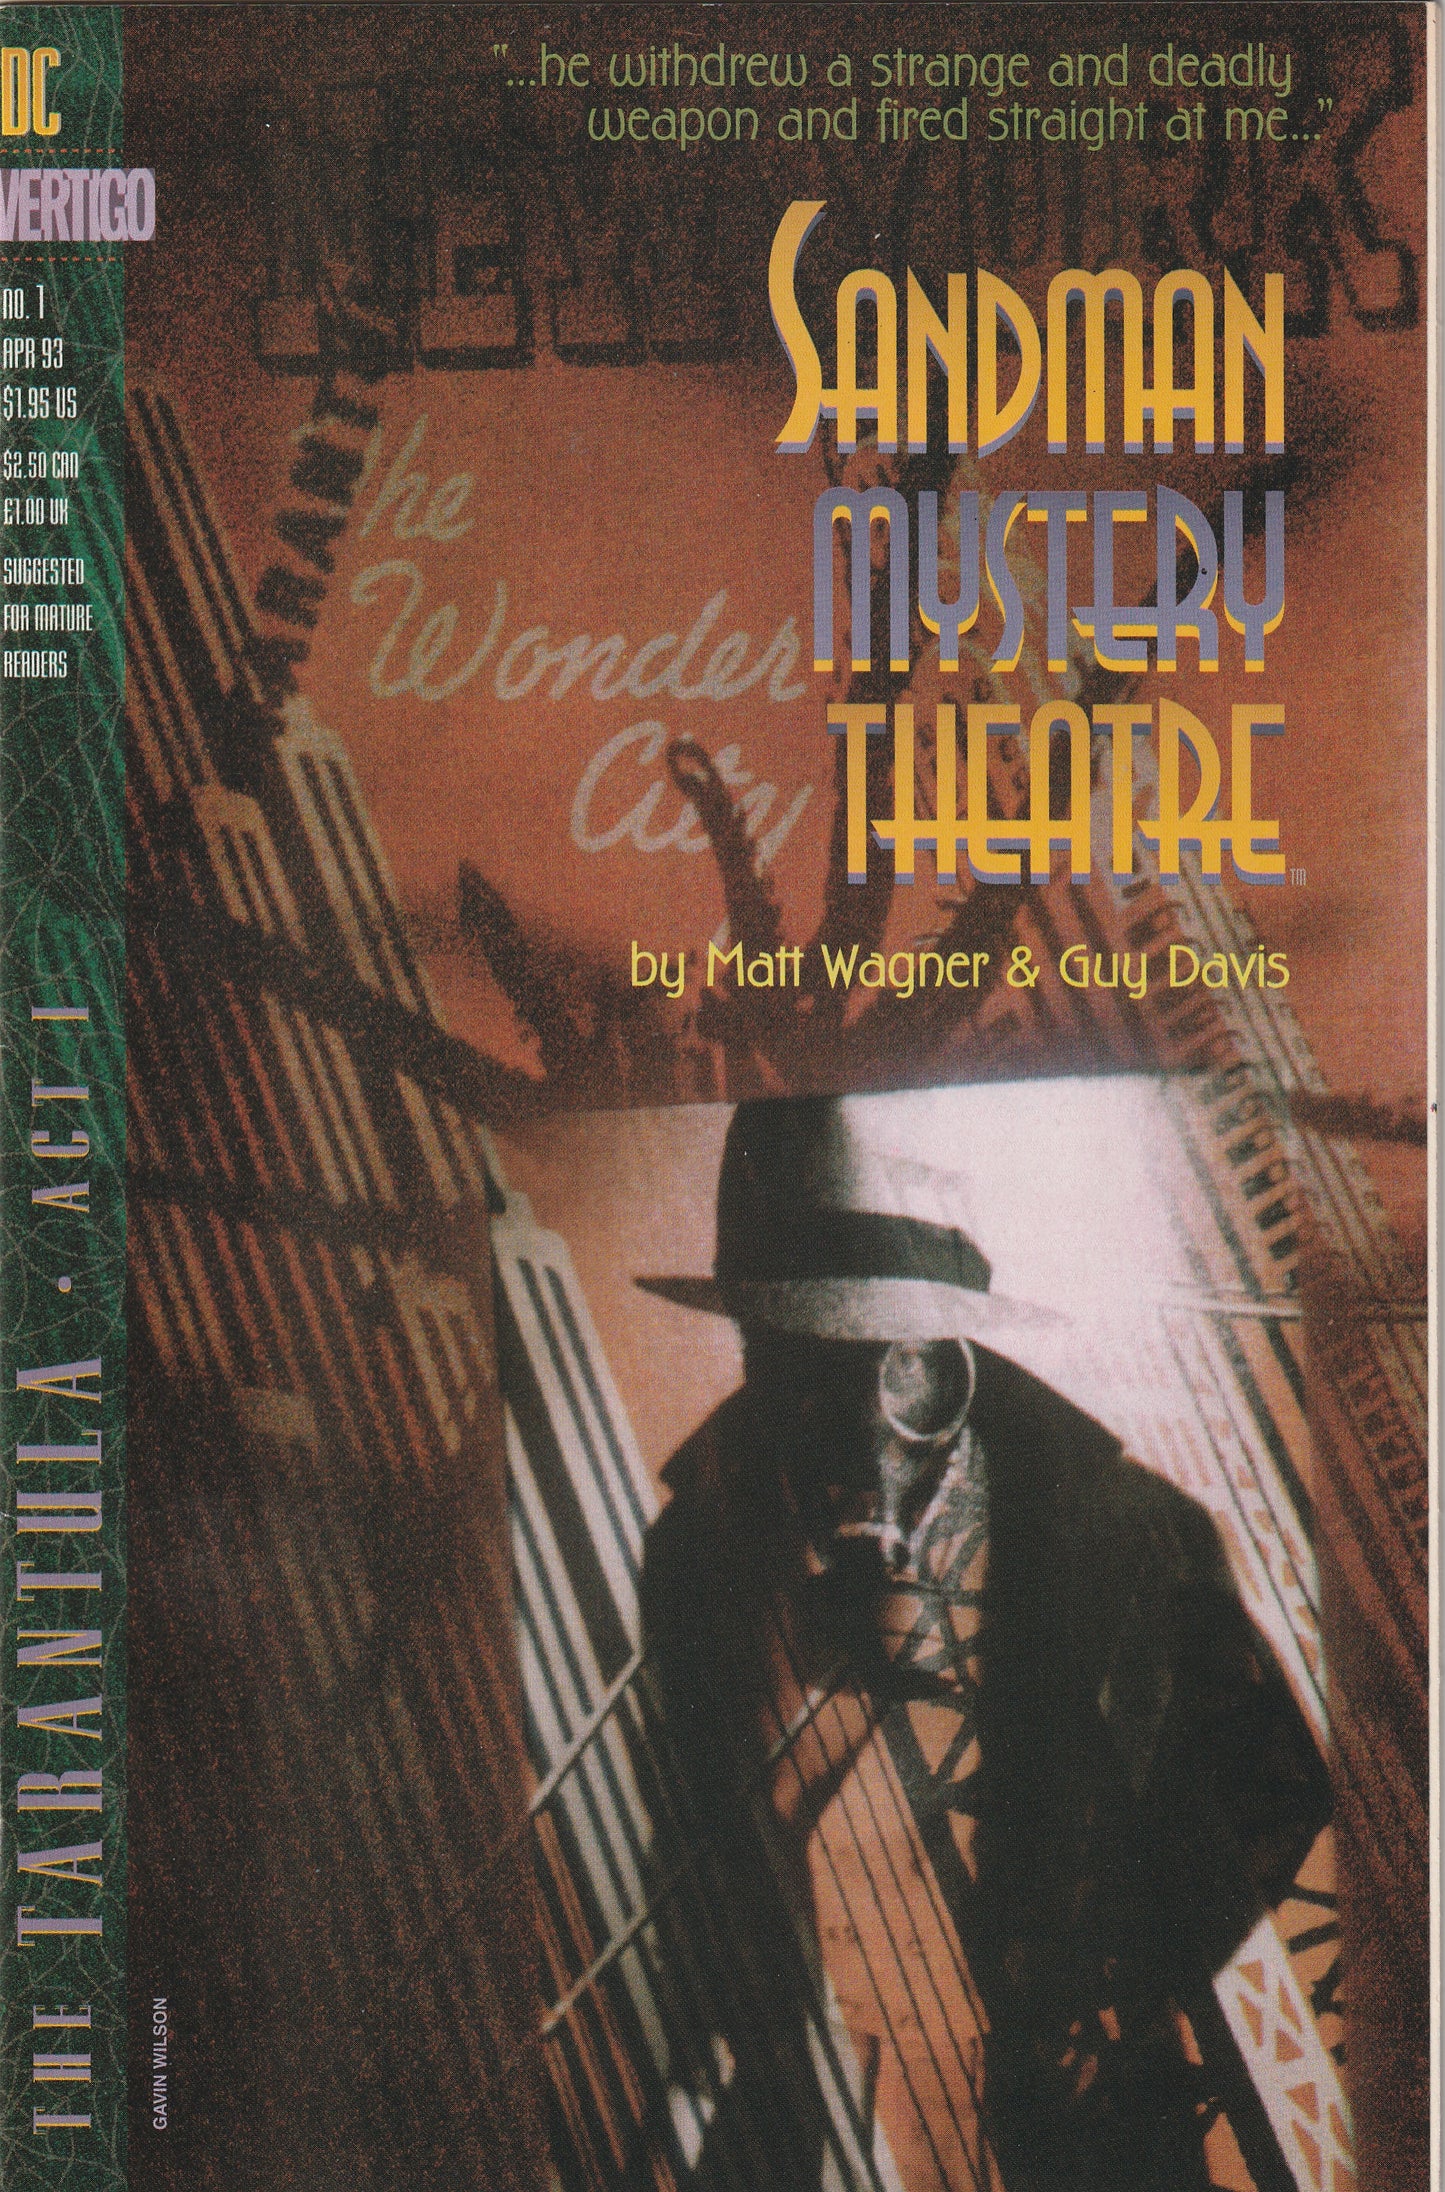 Sandman Mystery Theatre #1 (1993) - Matt Wagner & Guy Davis